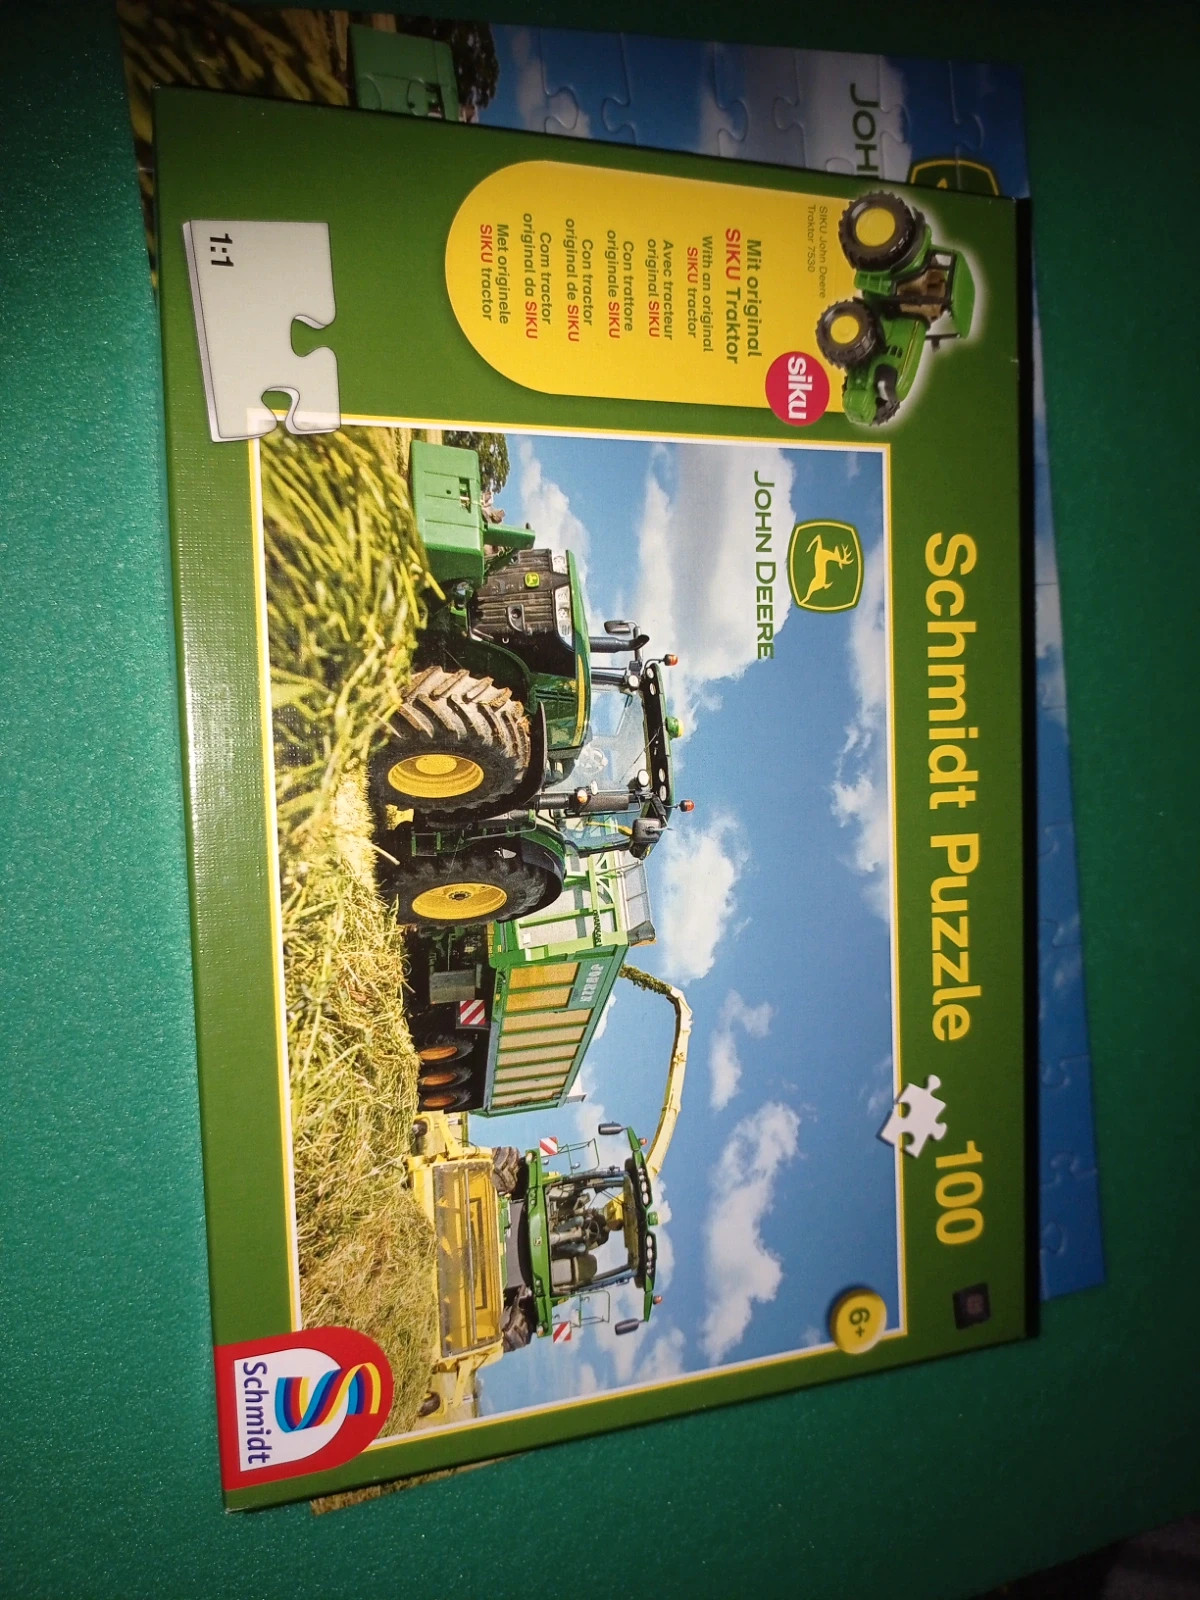 John Deere - Traktor - 100 Teile - SCHMIDT SPIELE Puzzle online kaufen